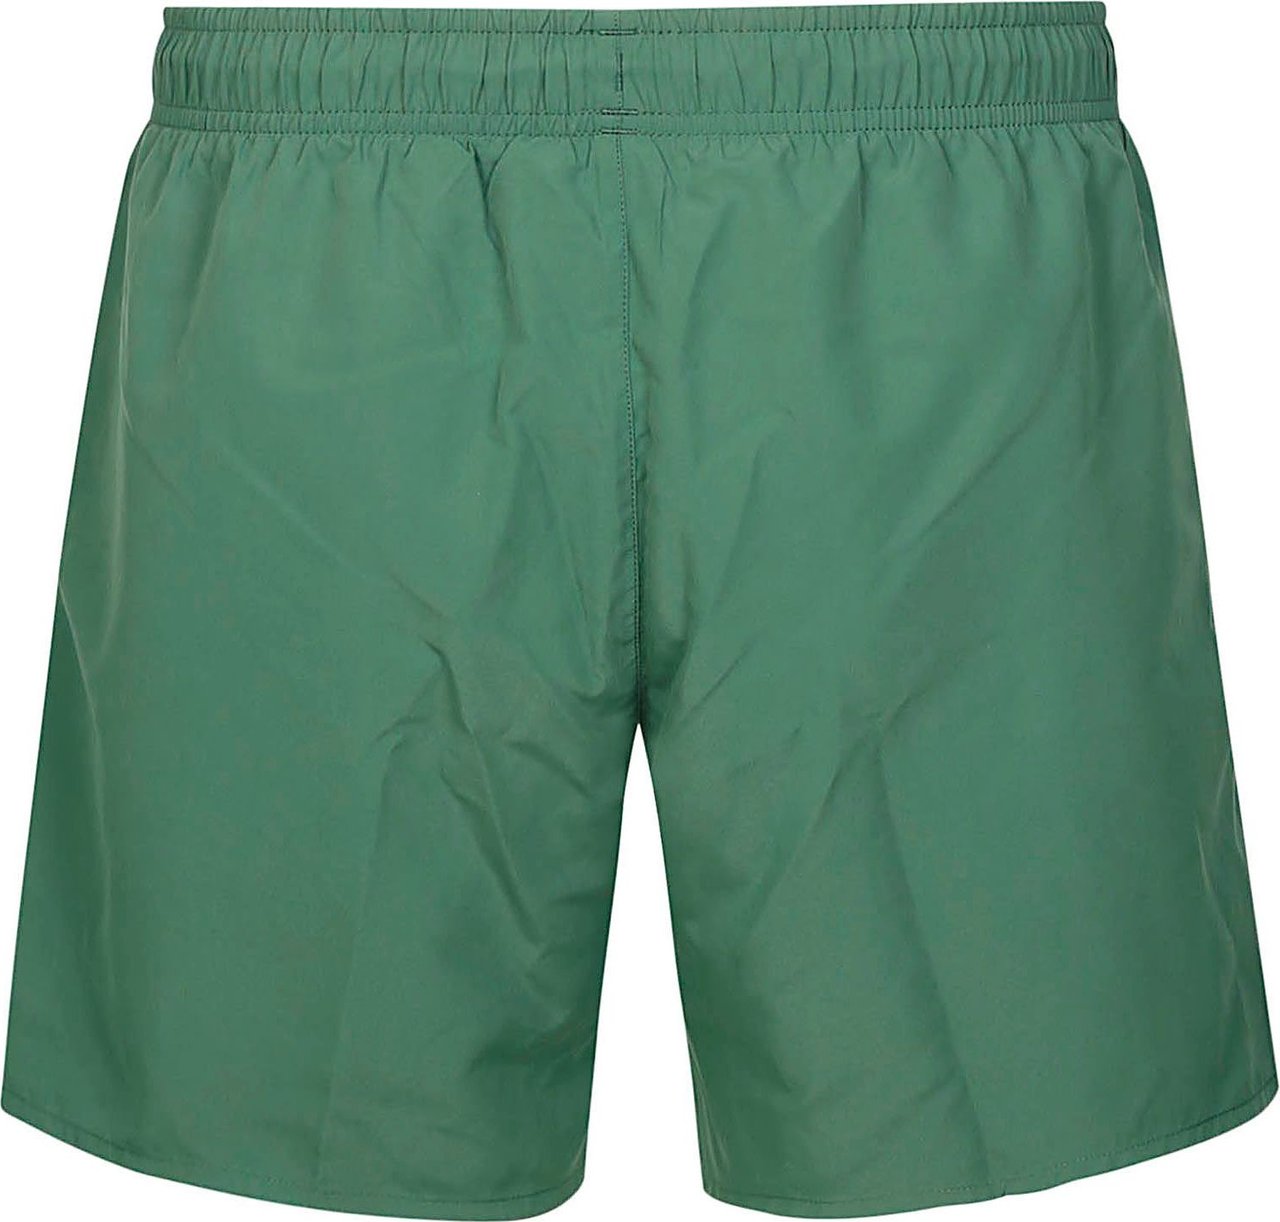 Lacoste Sea Clothing Green Groen